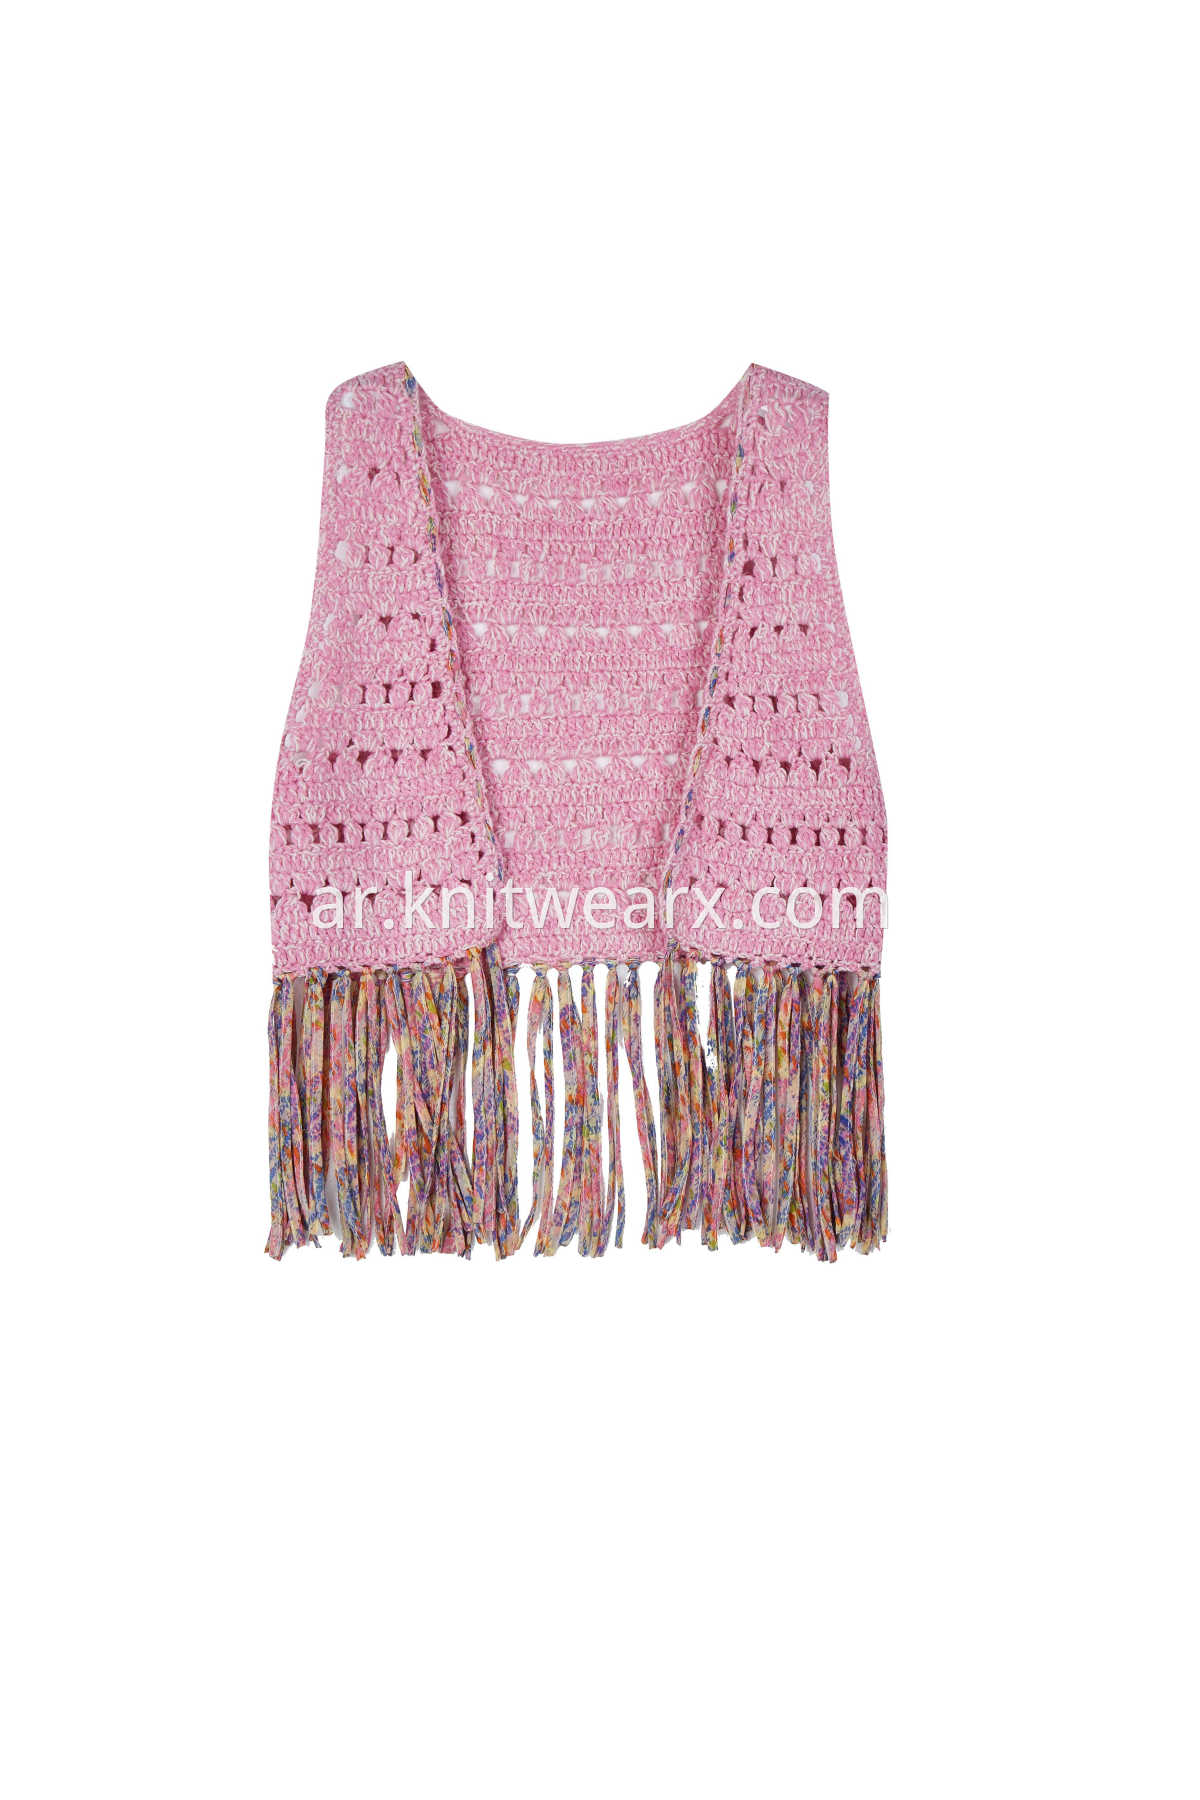 Baby's Summer Hollow Knit Wrap Crochet Vest Chiffon Fringe Holiday Cardigan